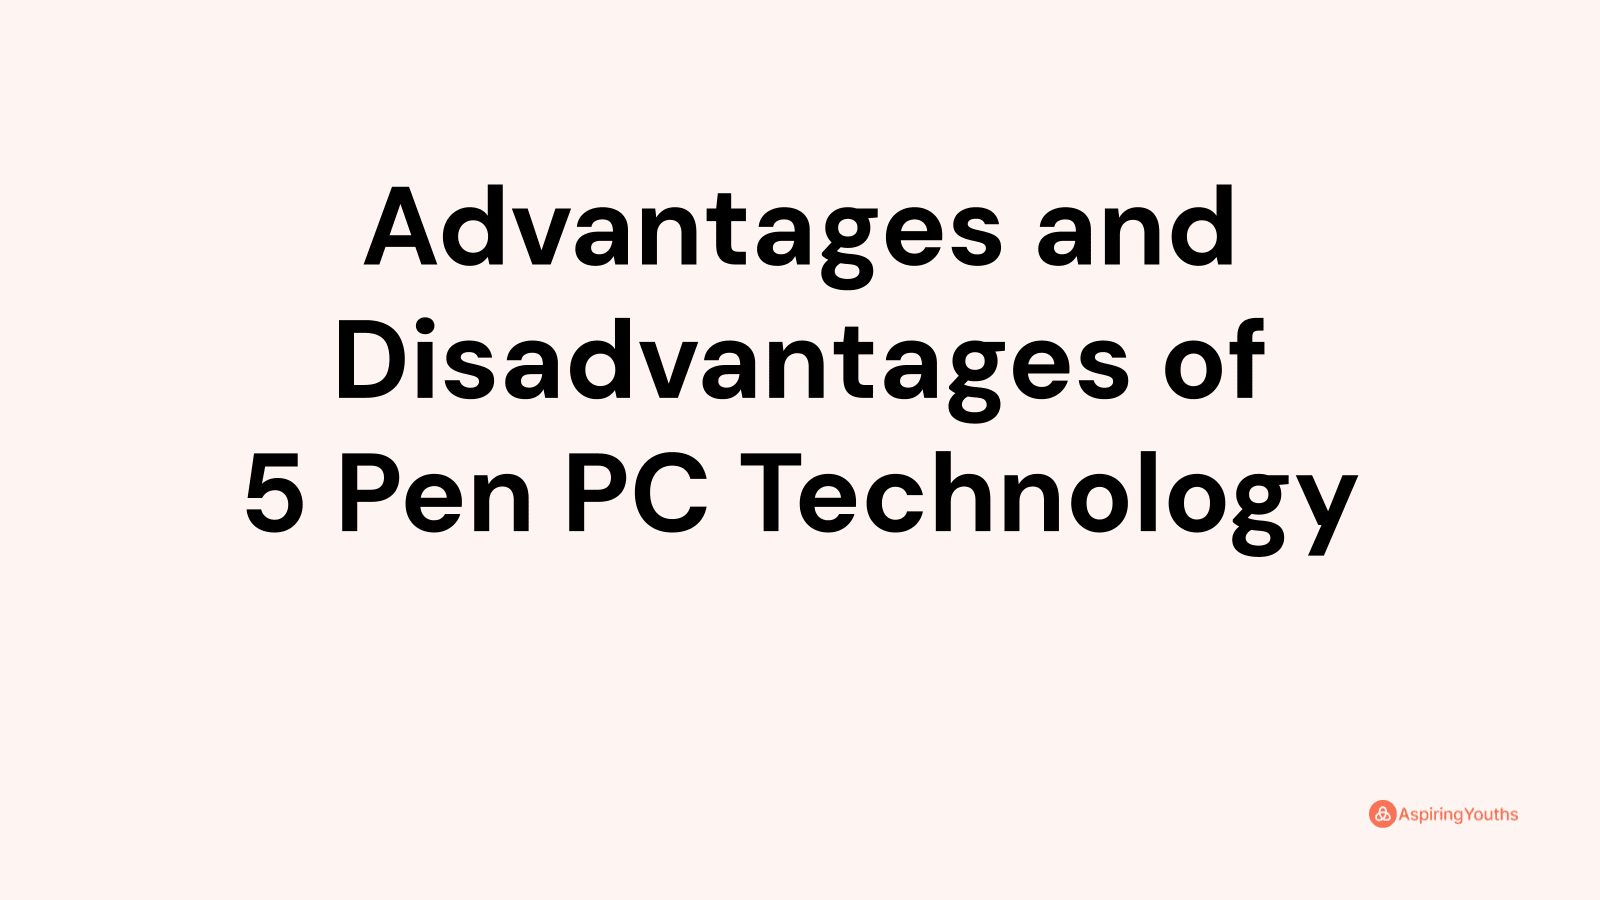 Advantages and disadvantages of 5 Pen PC Technology